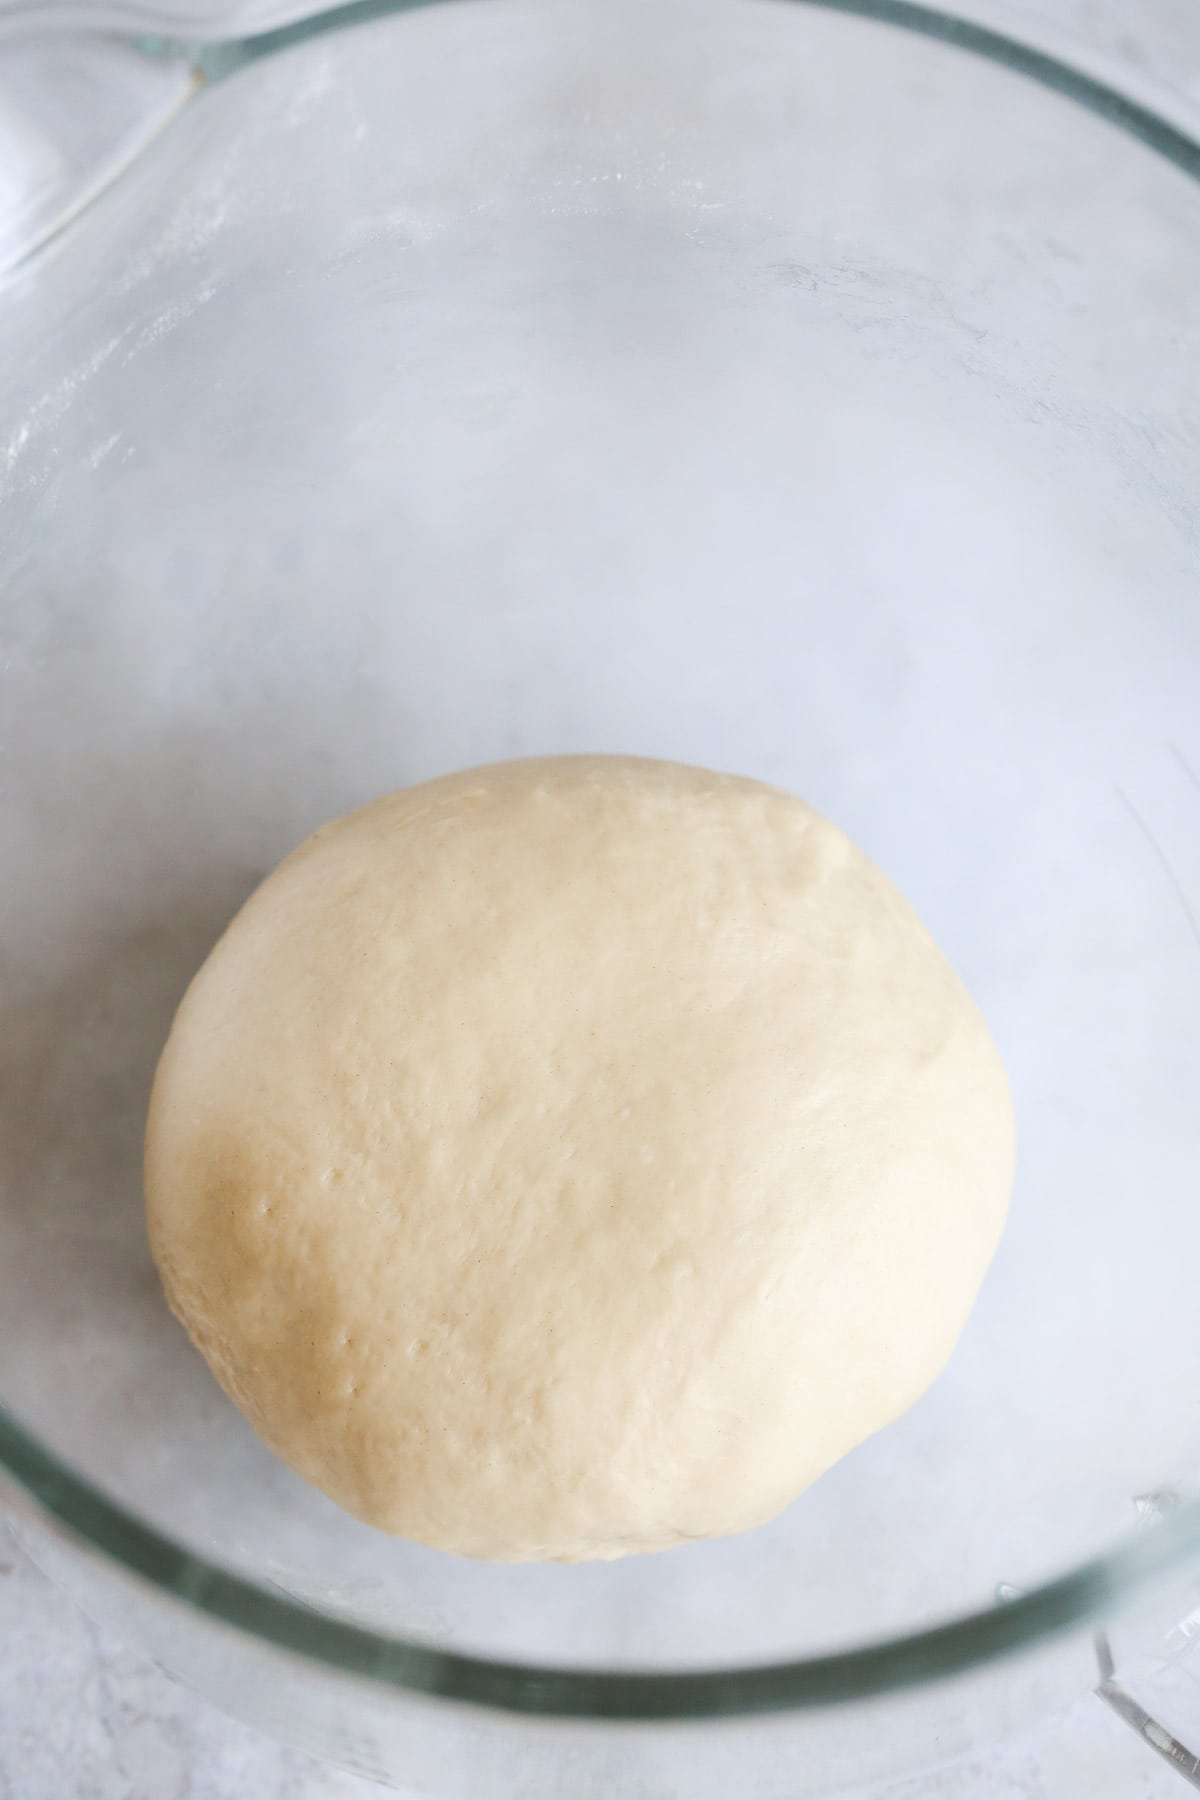 A dough ball in a glass bowl